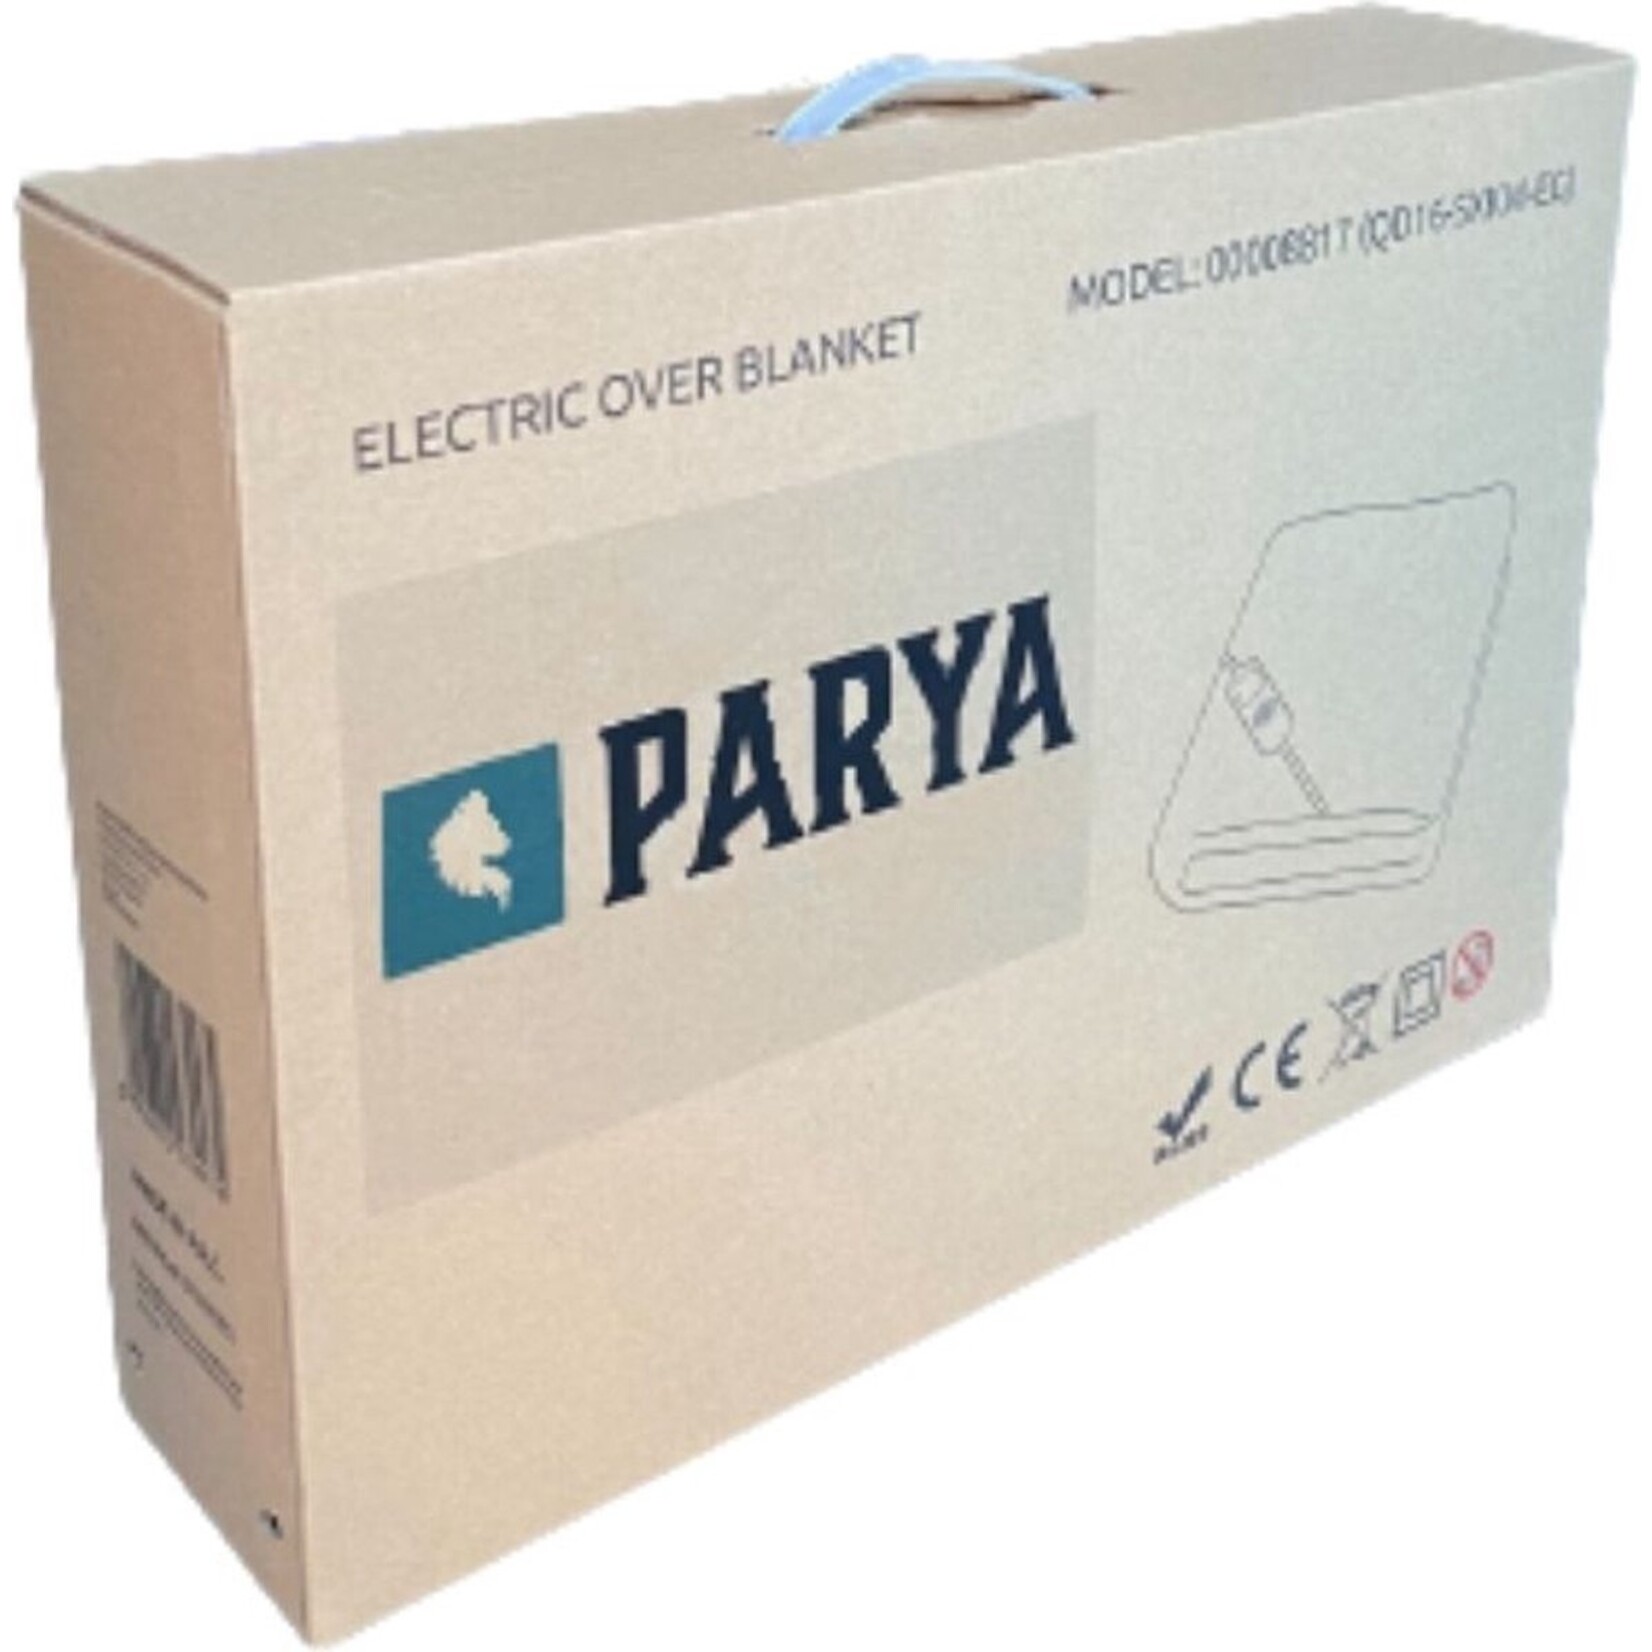 Parya Parya - Electric underblanket - 190x80 cm - Polyester - Cremé /White